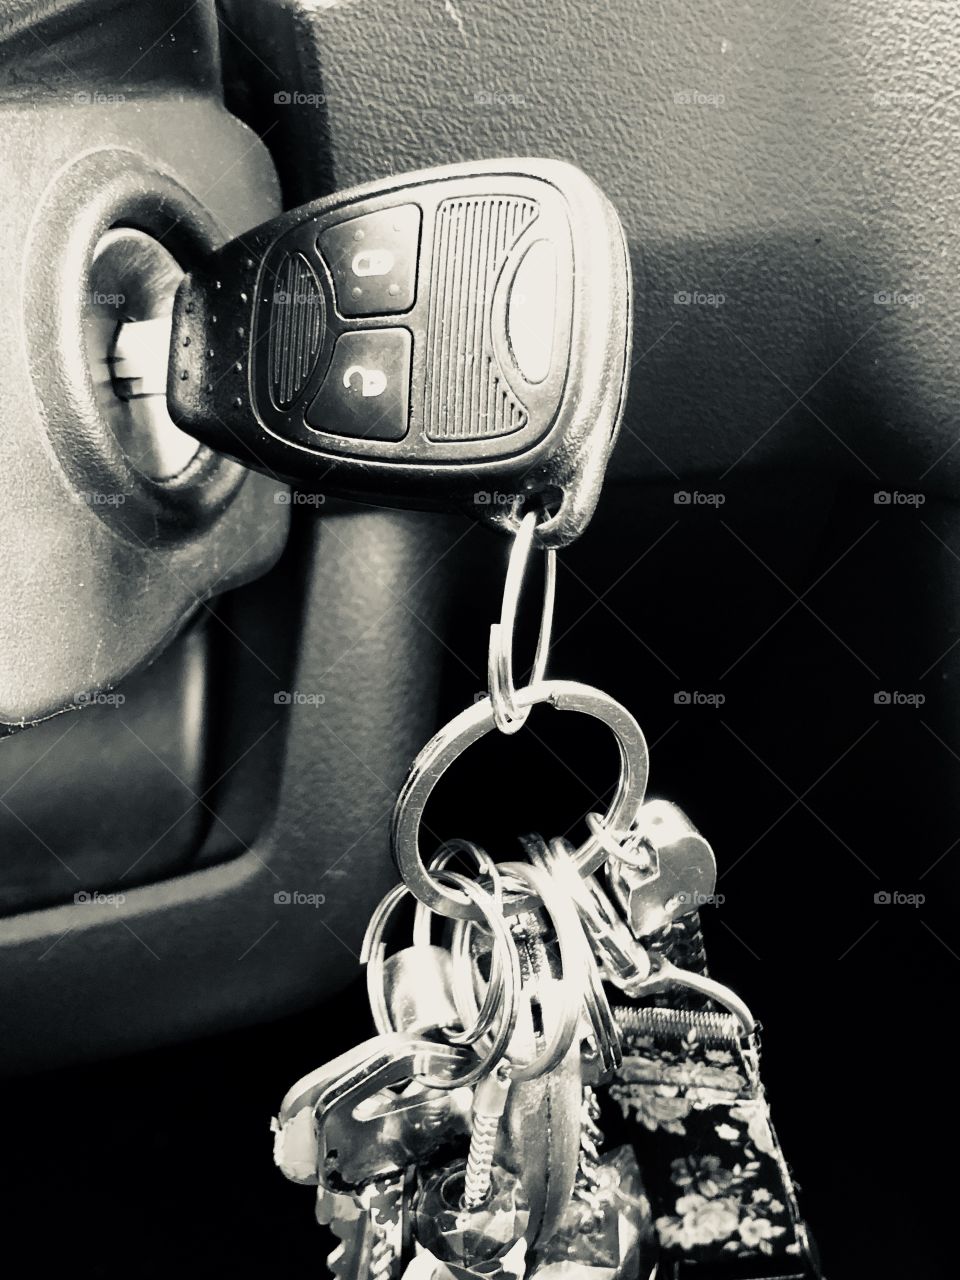 Keys 